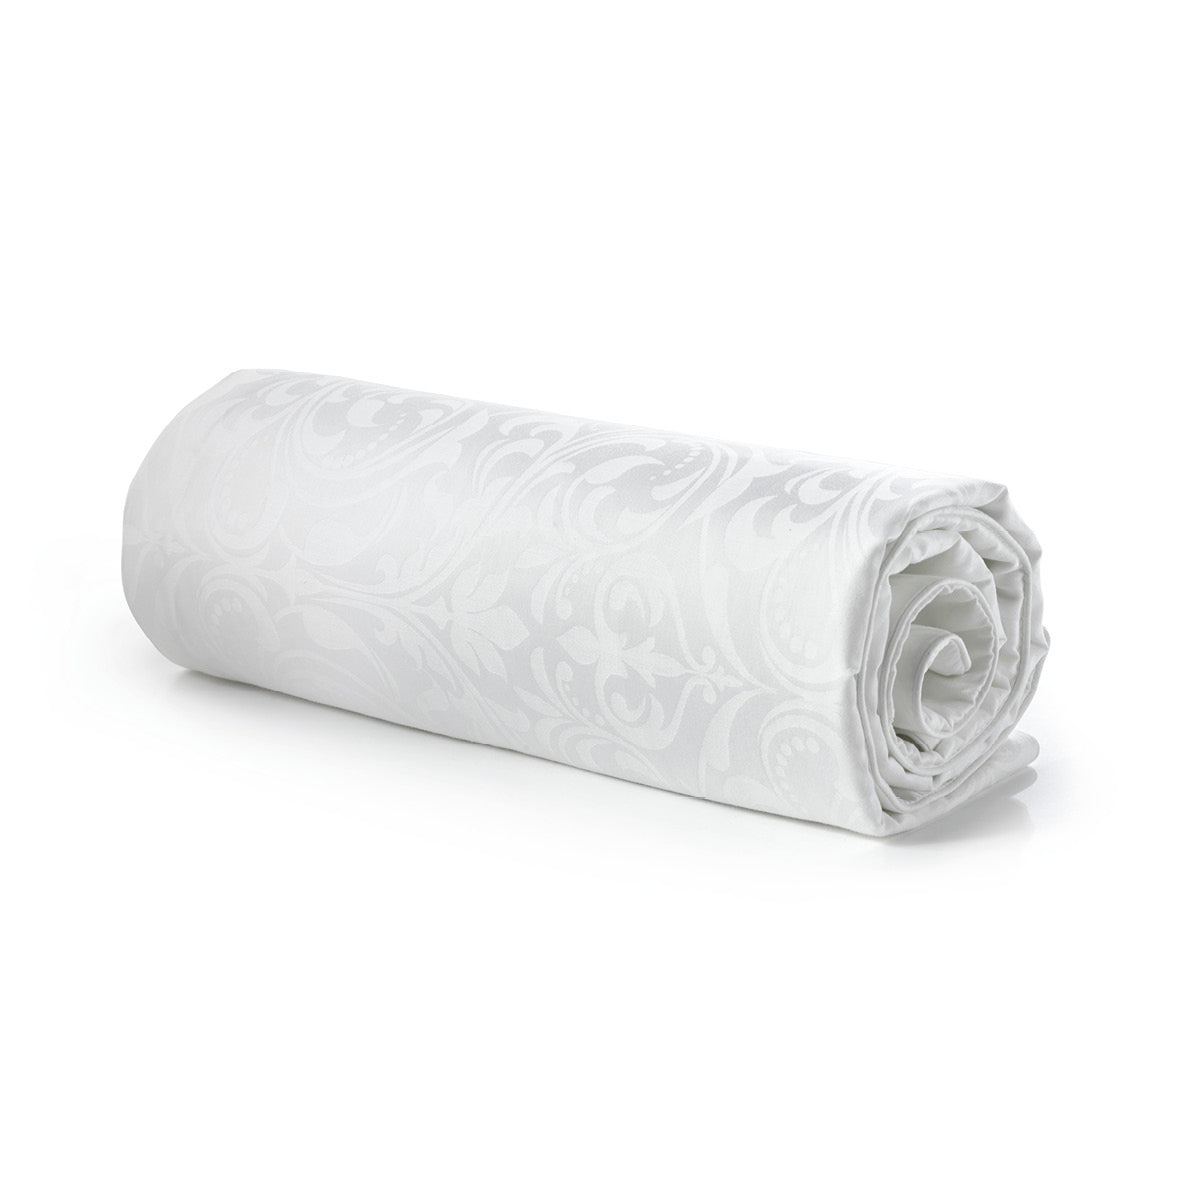 Baby blanket cotton satin Jacquard woven Victorian White - 80 x 120 cm